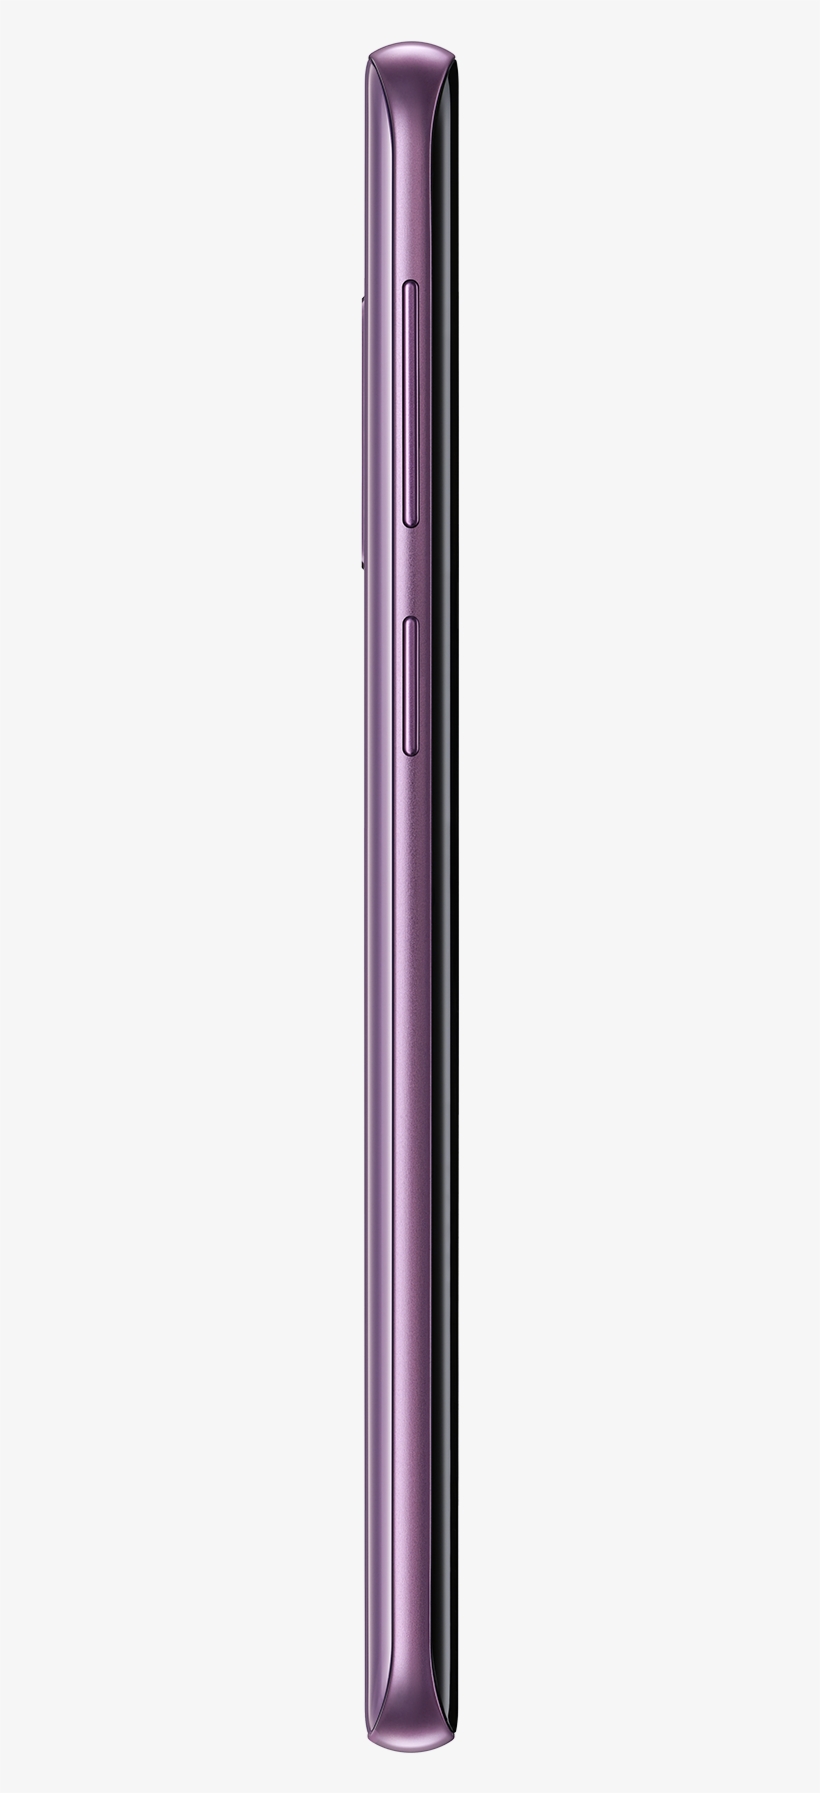 Samsung Galaxy S9 Dual Sim Lilac Purple - Mobile Phone, transparent png #3904619